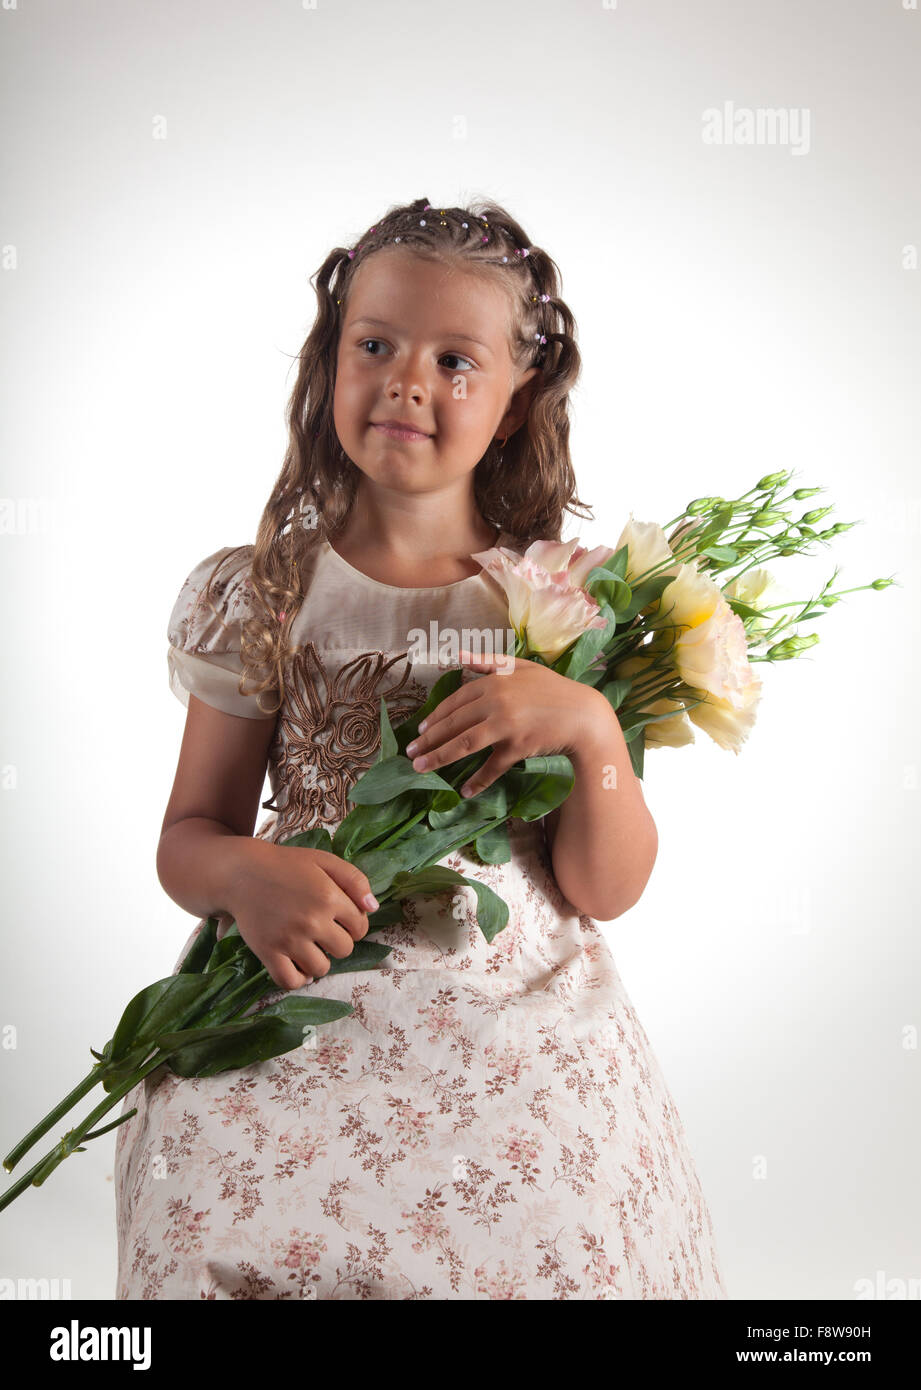 Cute little girl holding flowers Stock Photo